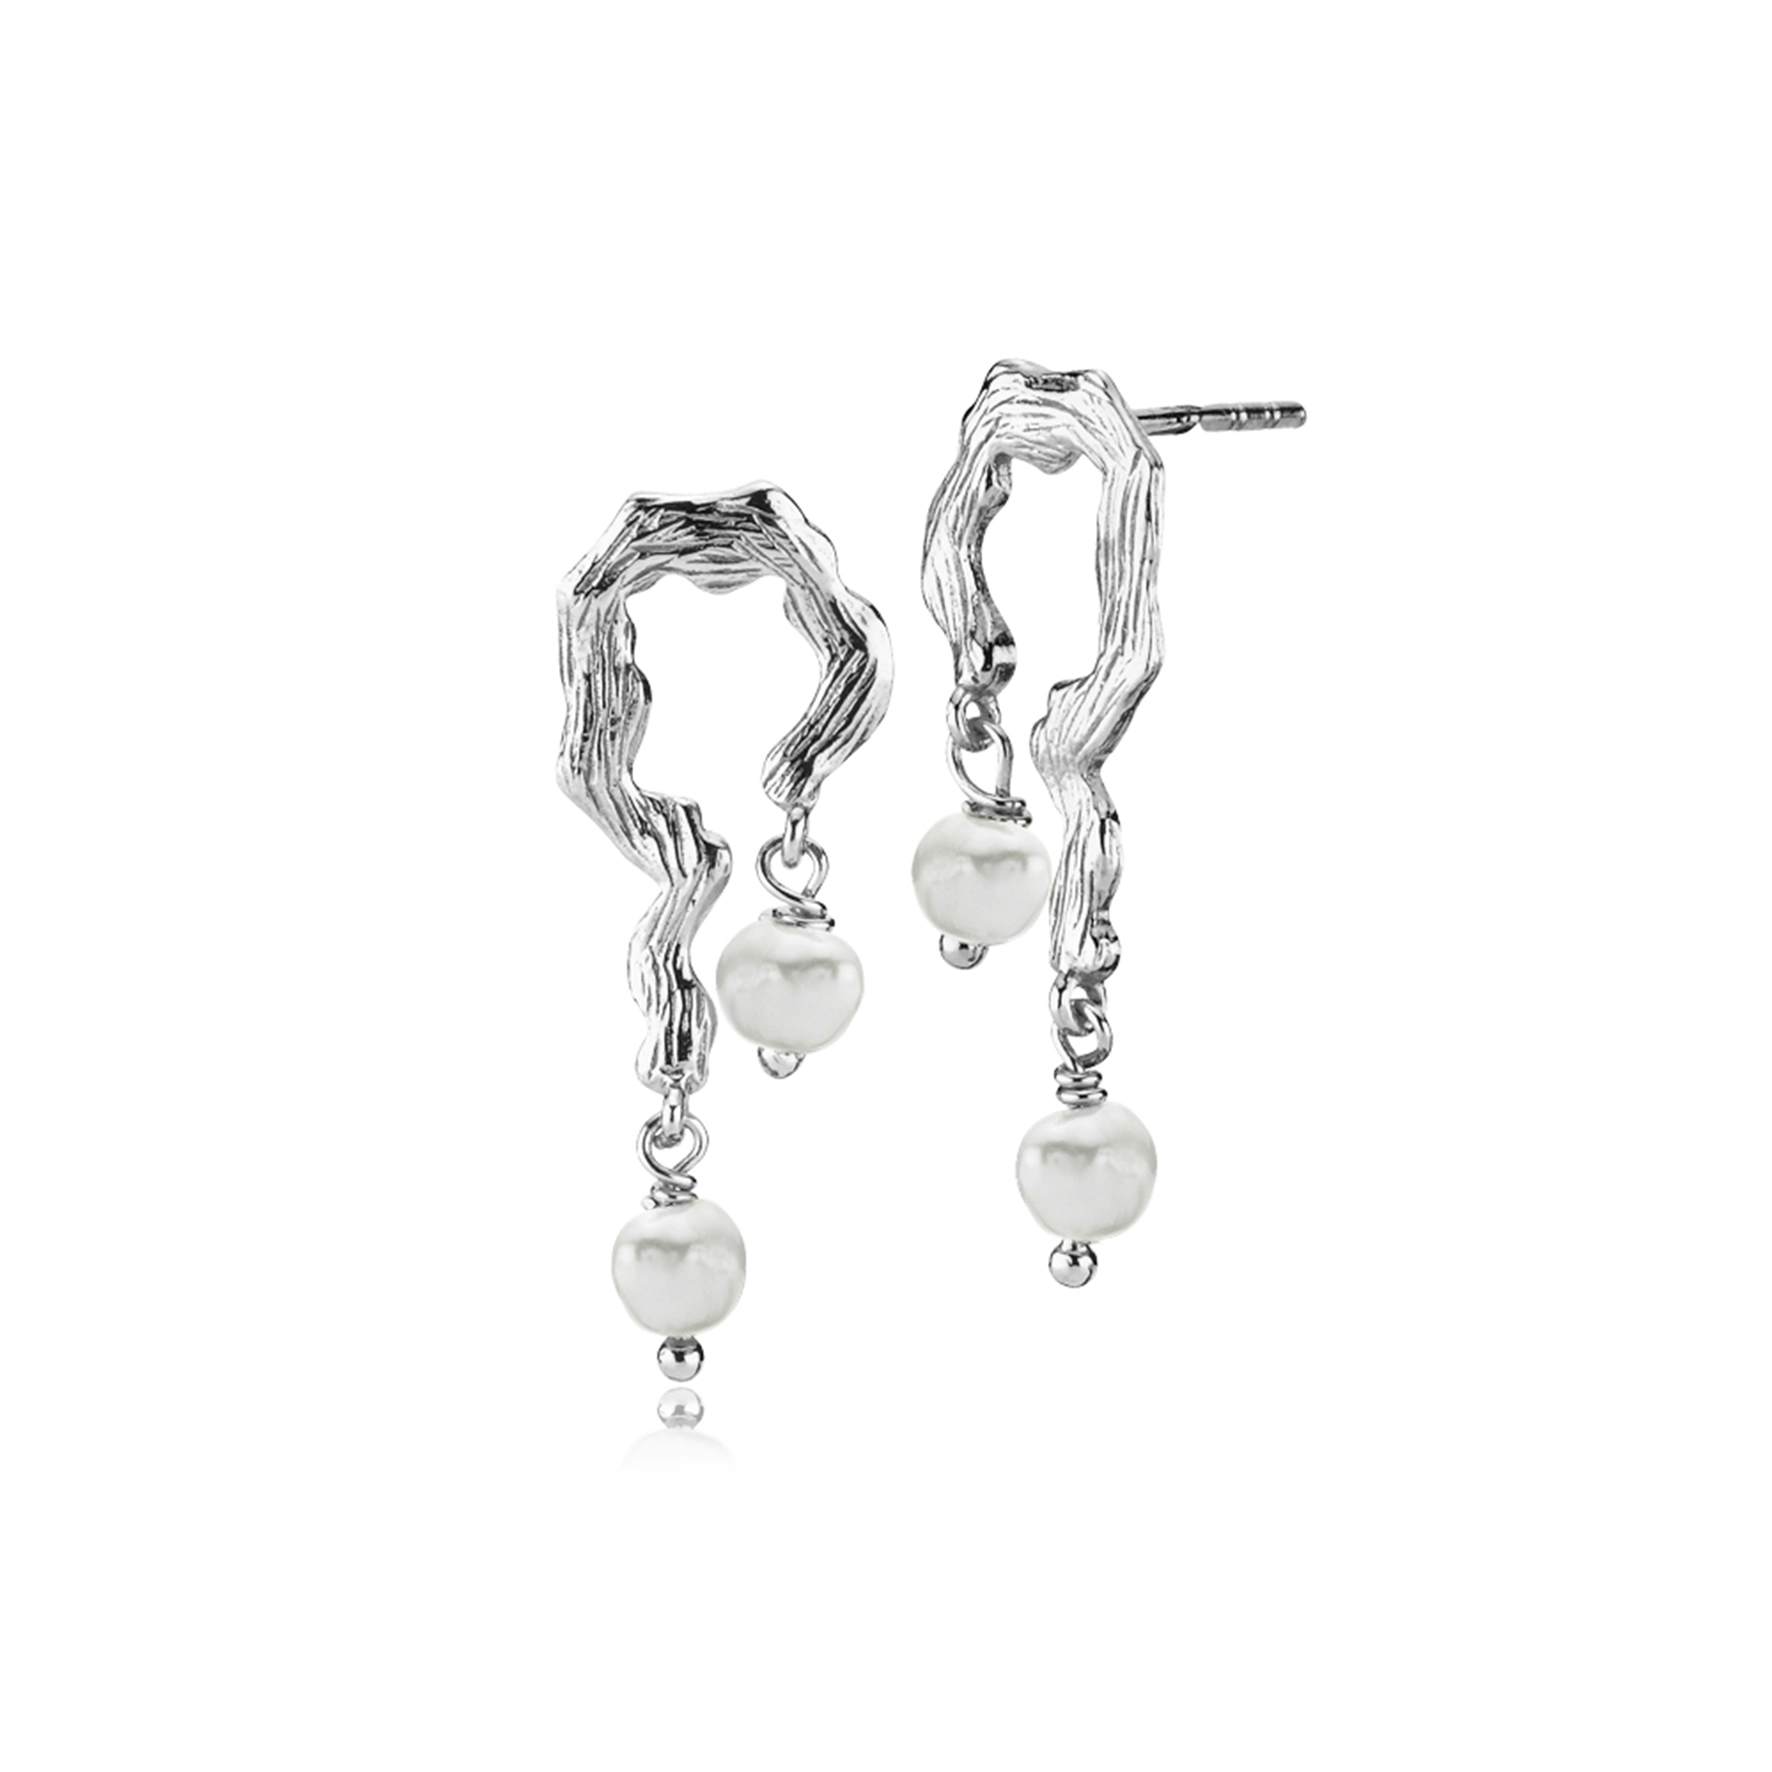 Lærke Bentsen By Sistie Earrings With Pearls from Sistie in Silver Sterling 925